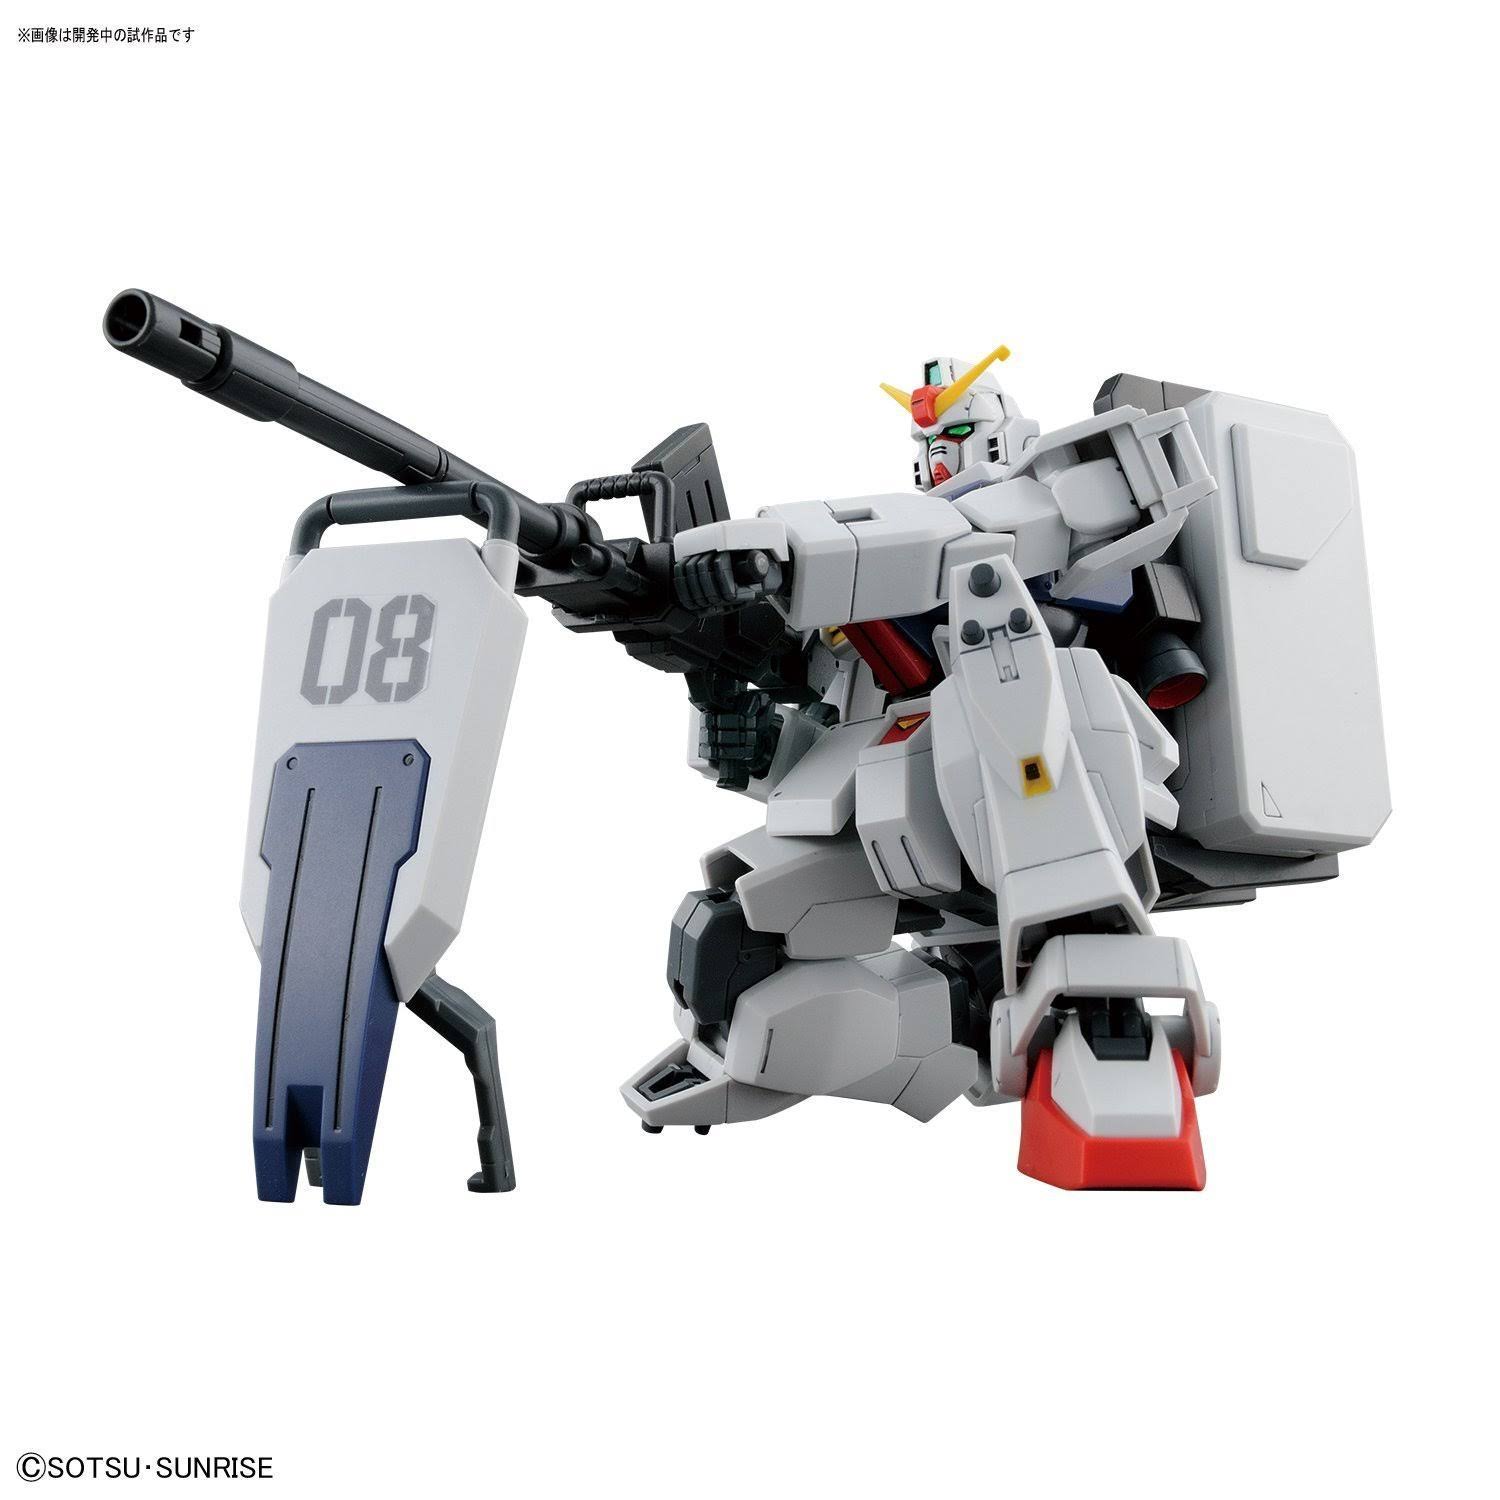 Bandai Hguc 210 Gundam Ground Type Model Kit - Scale 1:44